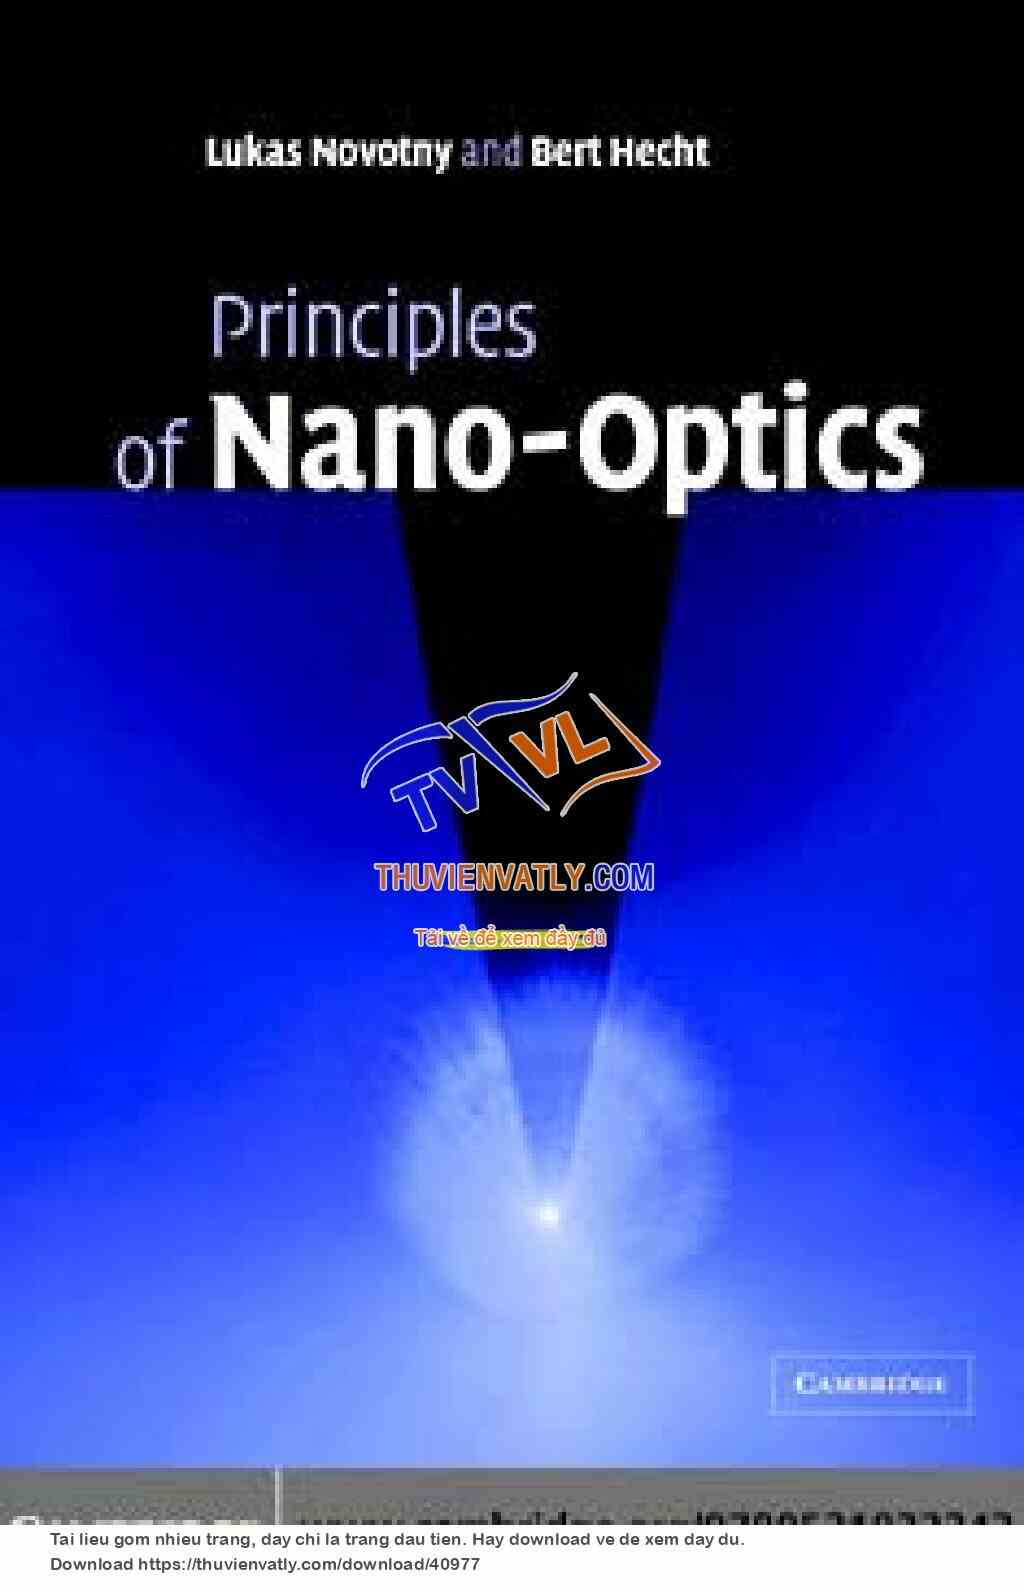 Principles of Nano-Optics